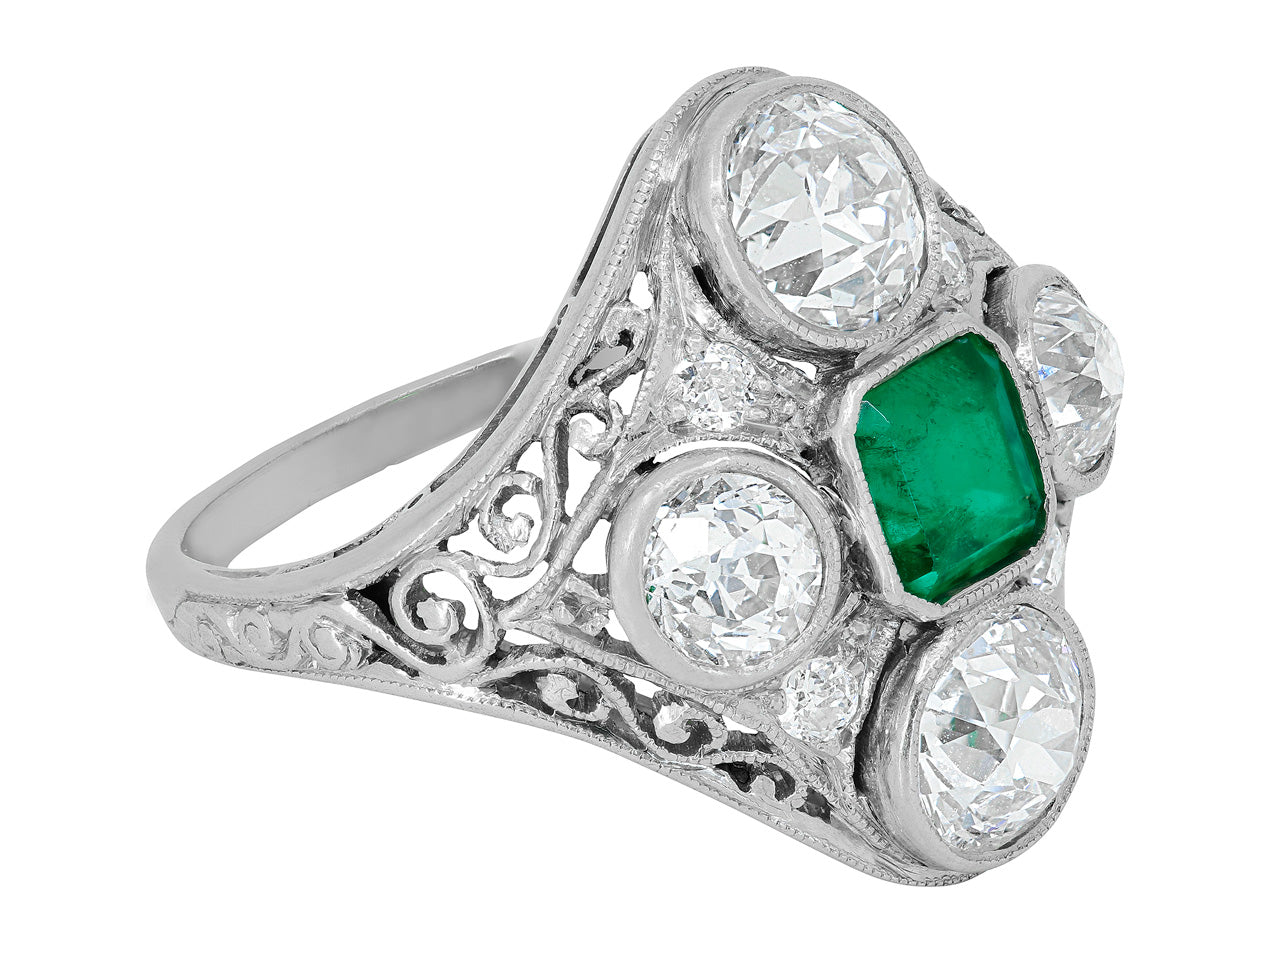 Antique Edwardian Emerald and Diamond Ring in Platinum